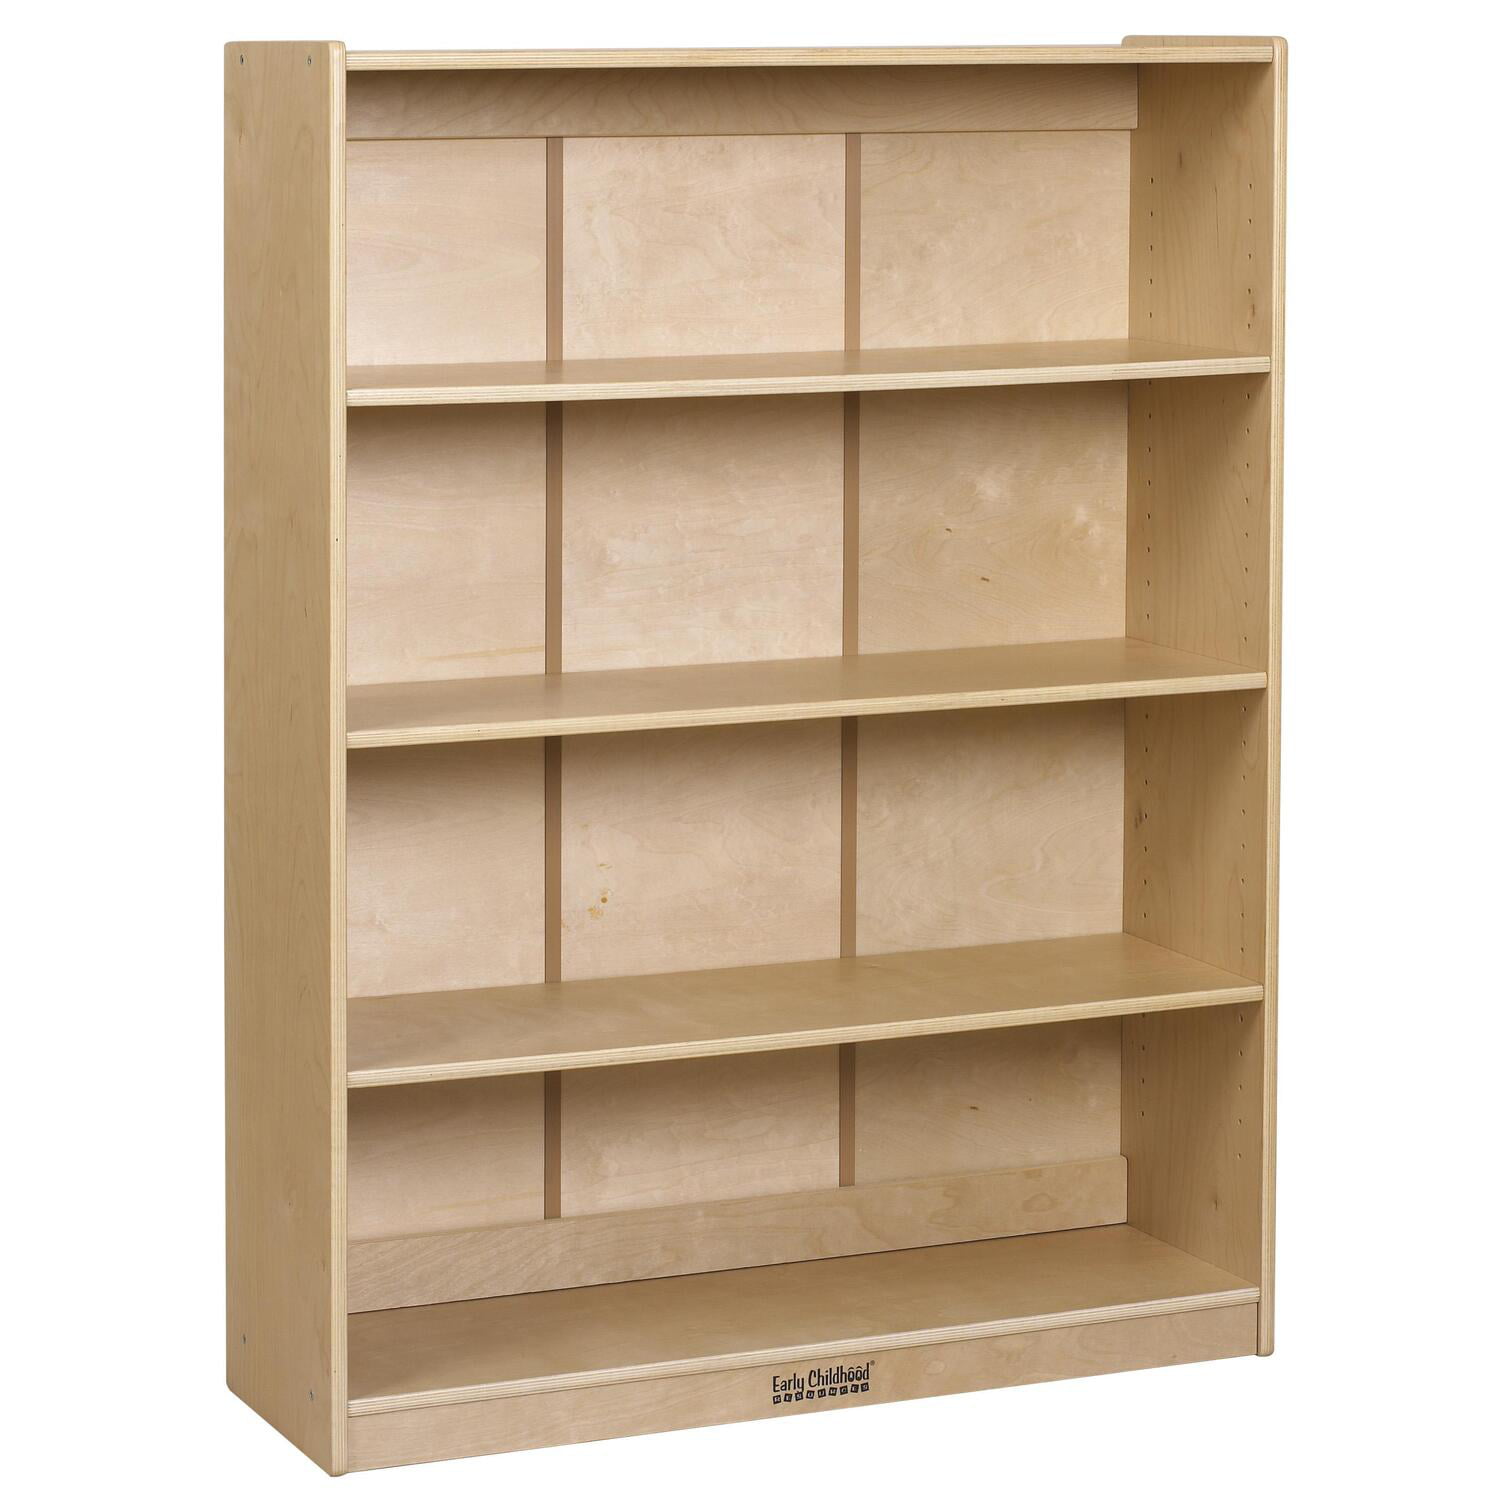 3 Storage Shelves GREENGUARD Gold Certified Wooden Bookshelf Organizer for Kids Natural ECR4Kids 36” H Birch Bookcase with Adjustable Shelves Shelving Units and Storage 